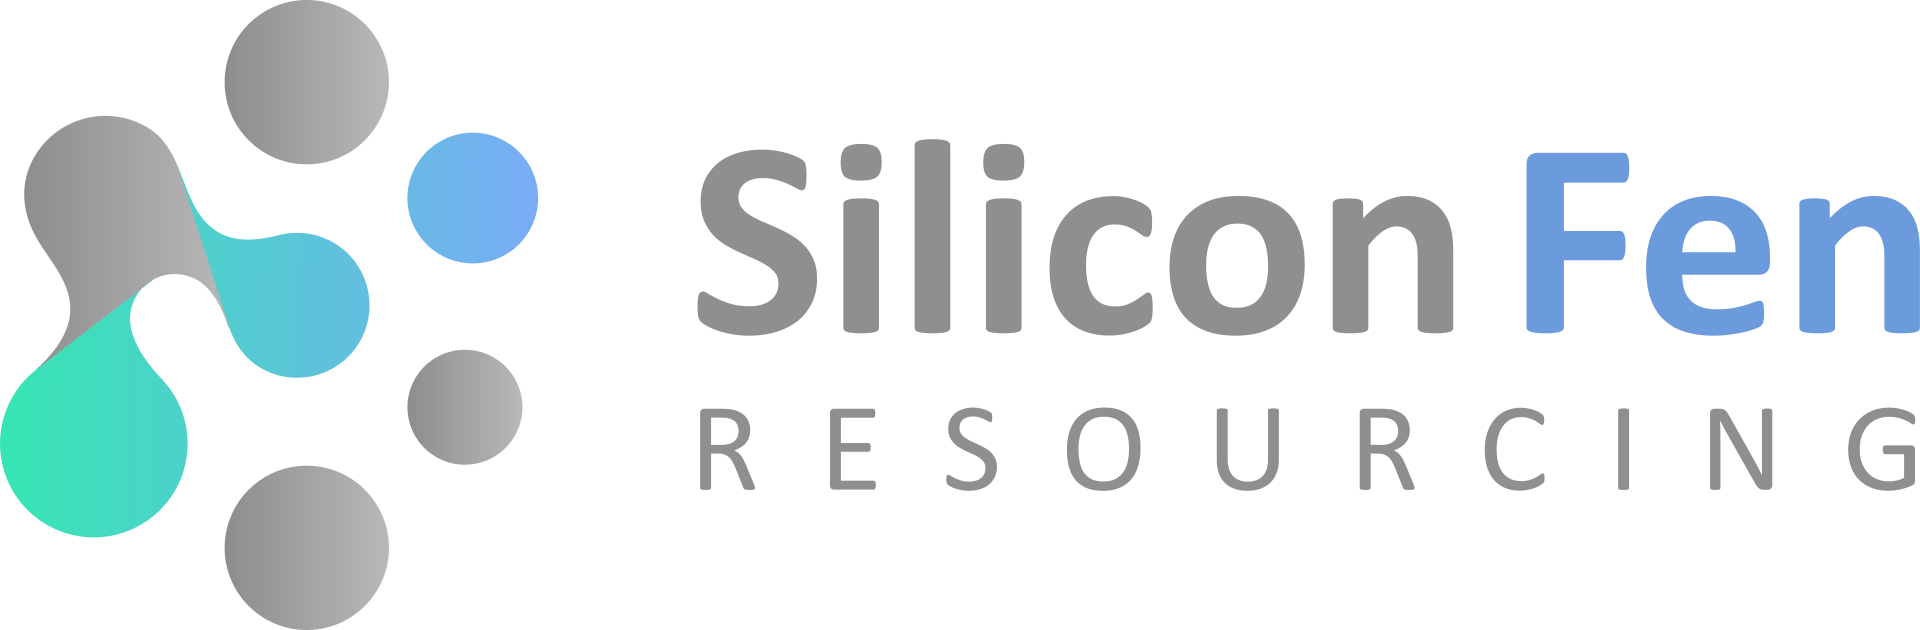 Silicon fen Resources